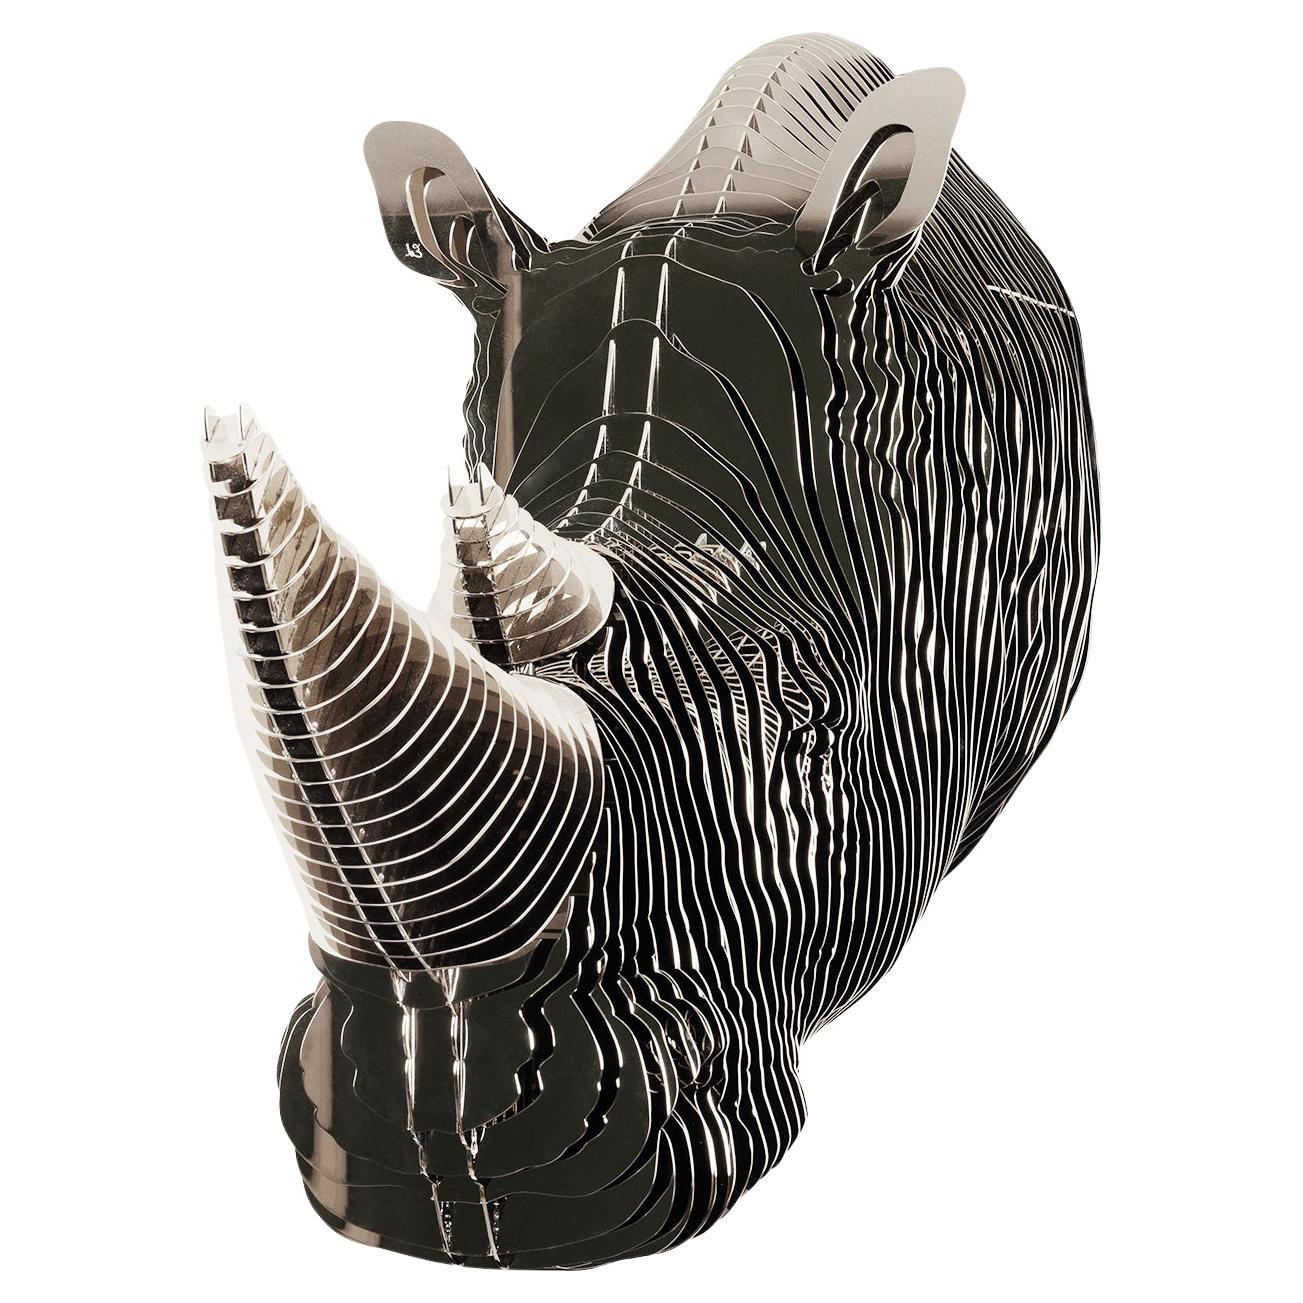 Rhino Trophee Sculpture For Sale